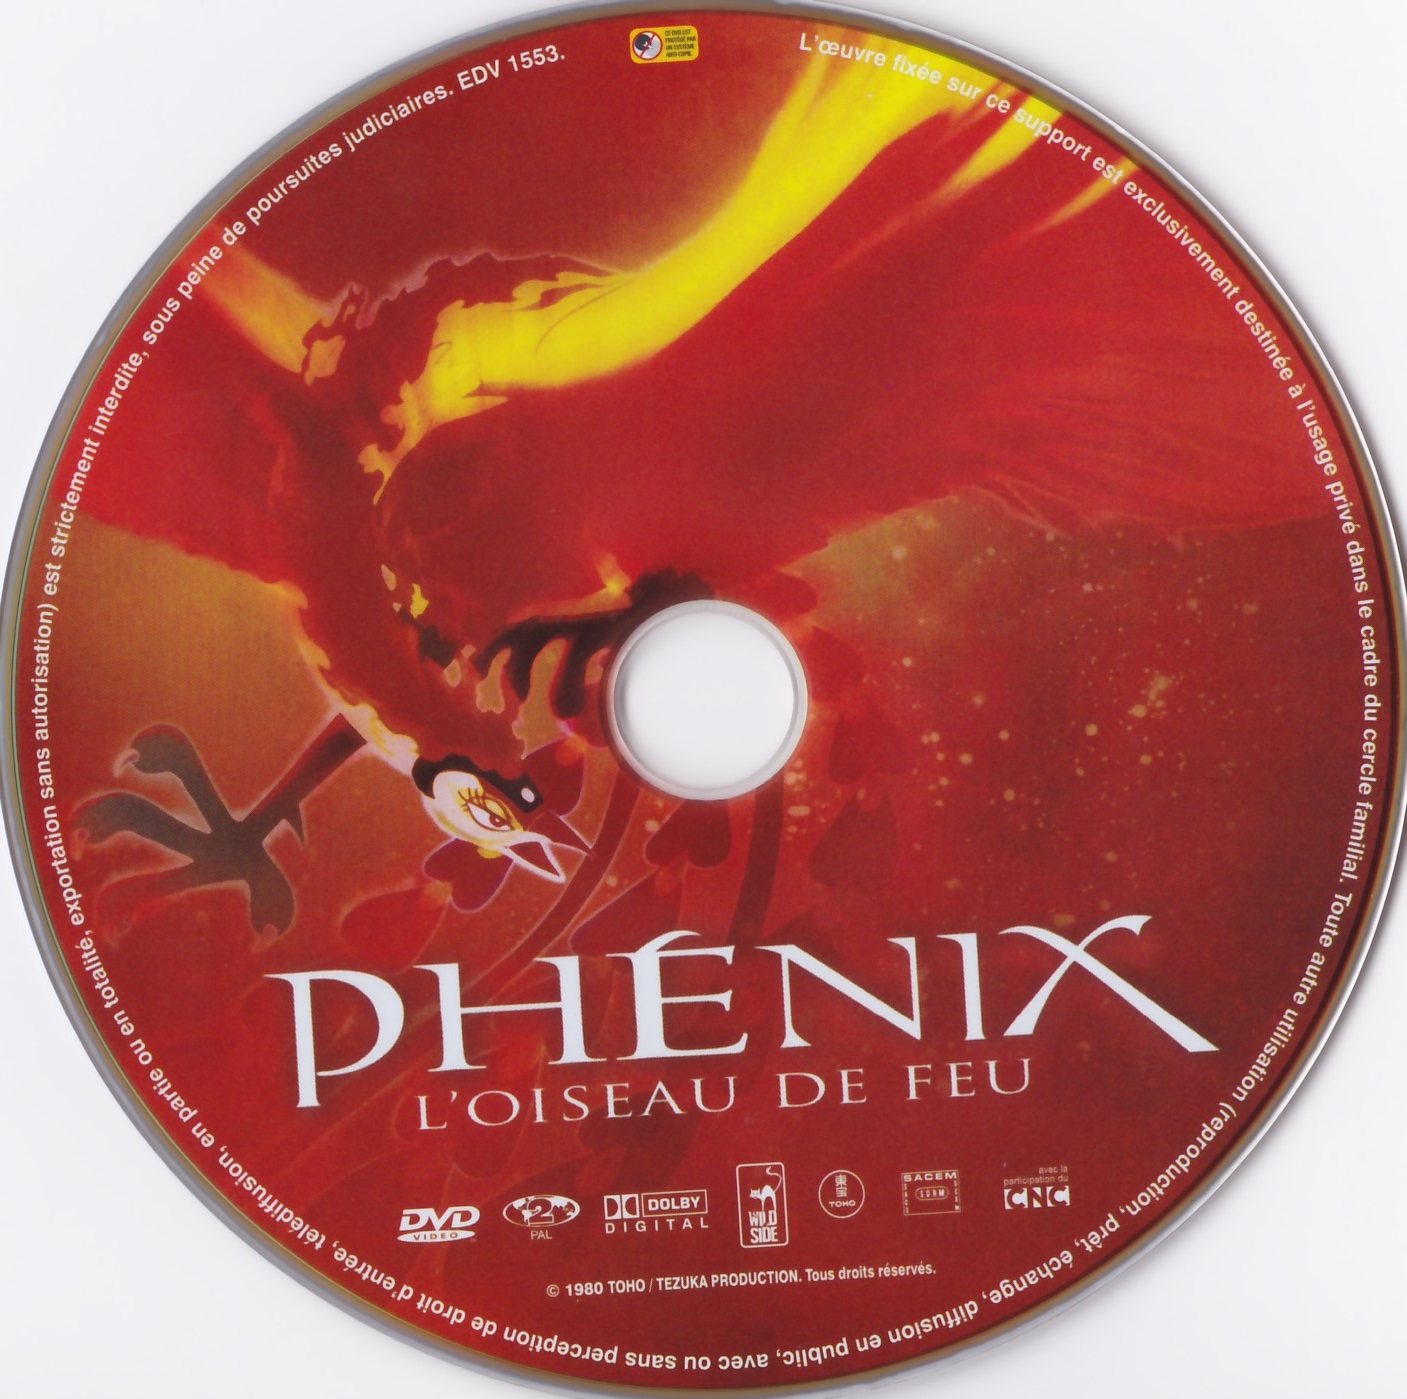 Phenix l